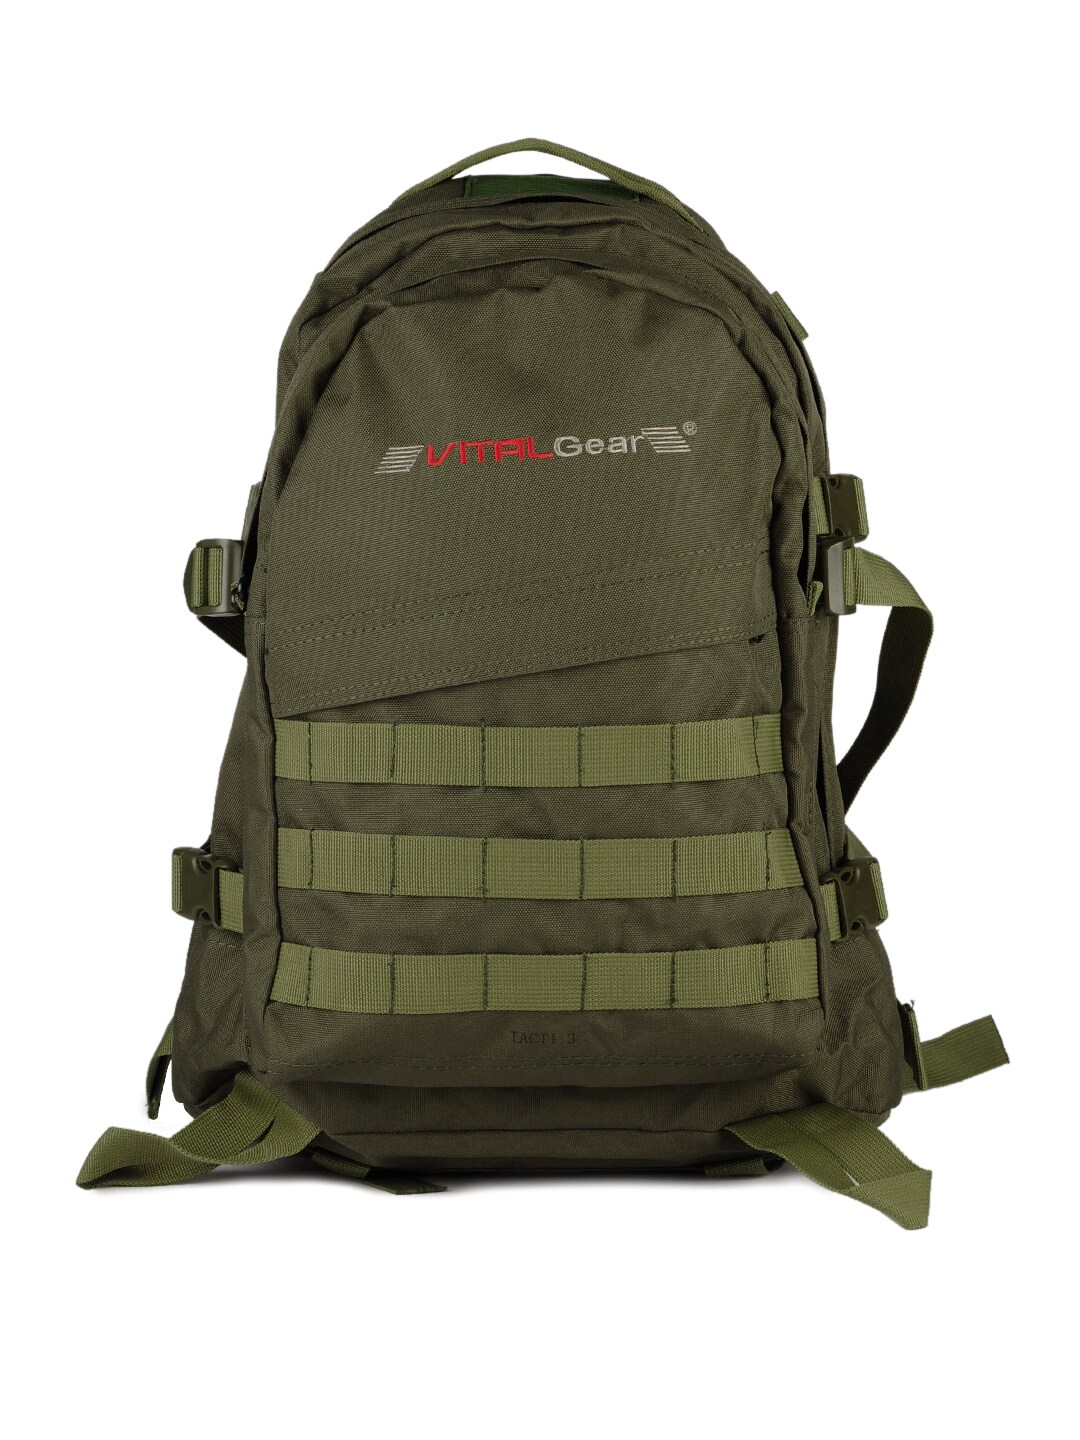 Vital Gear Unisex Olive Tacti Backpack